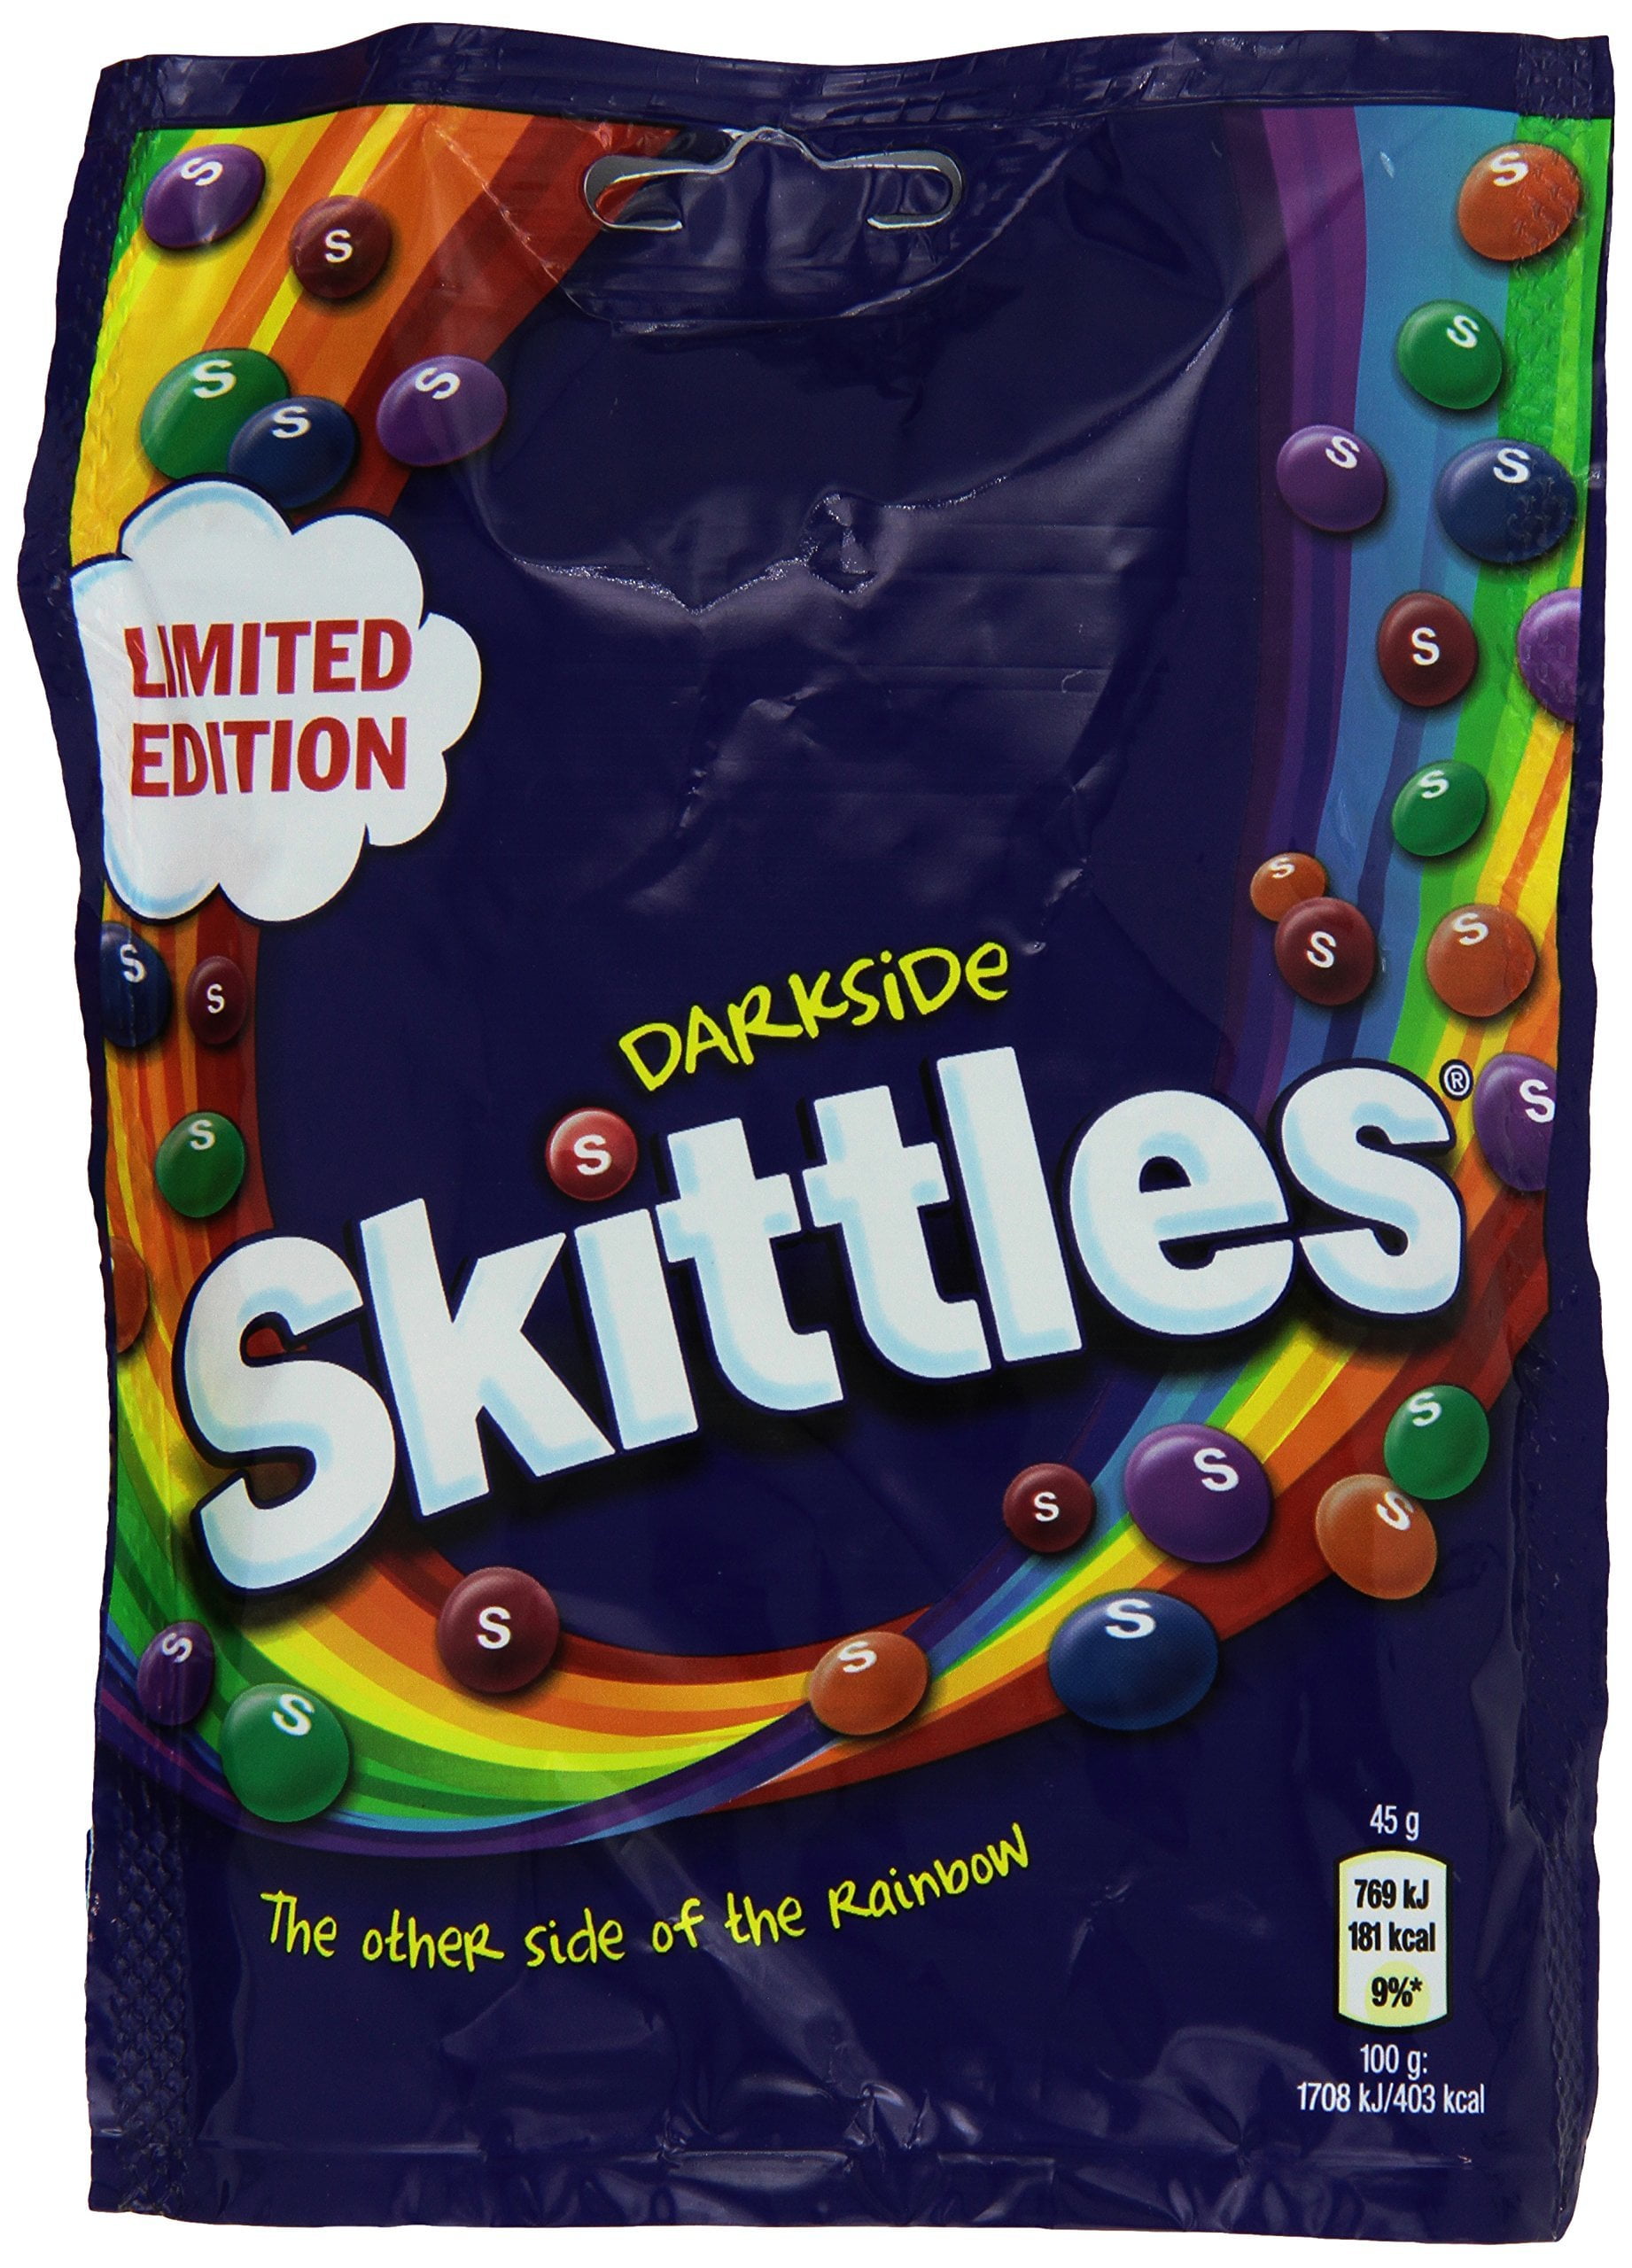 Skittles - Limited Edition Darkside - 174g - Walmart.com